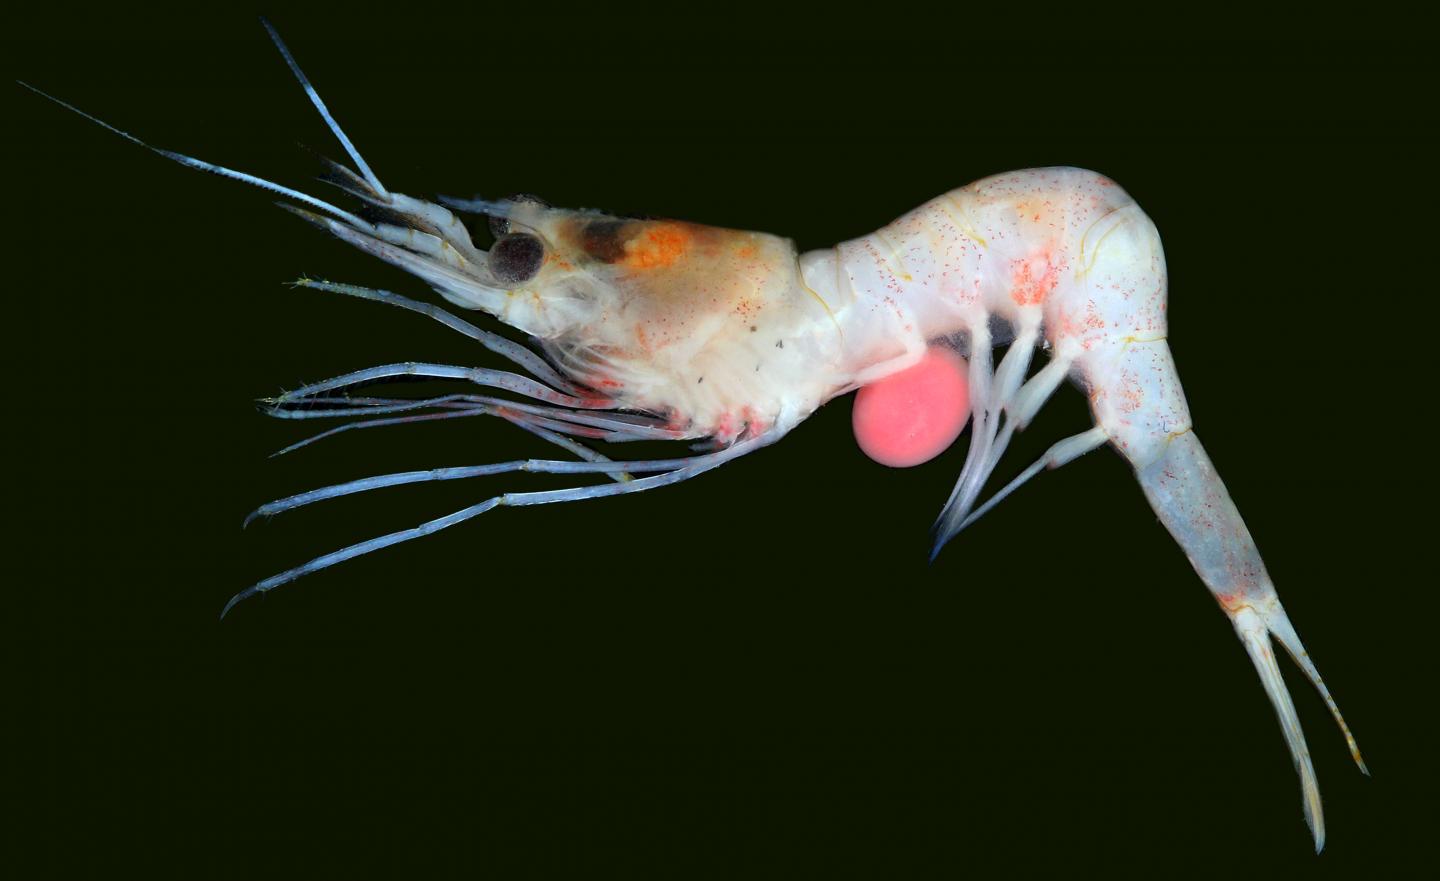 The rhizocephalan barnacle Sylon hippolytes (Red Sac-like Structure) on its Shrimp Host